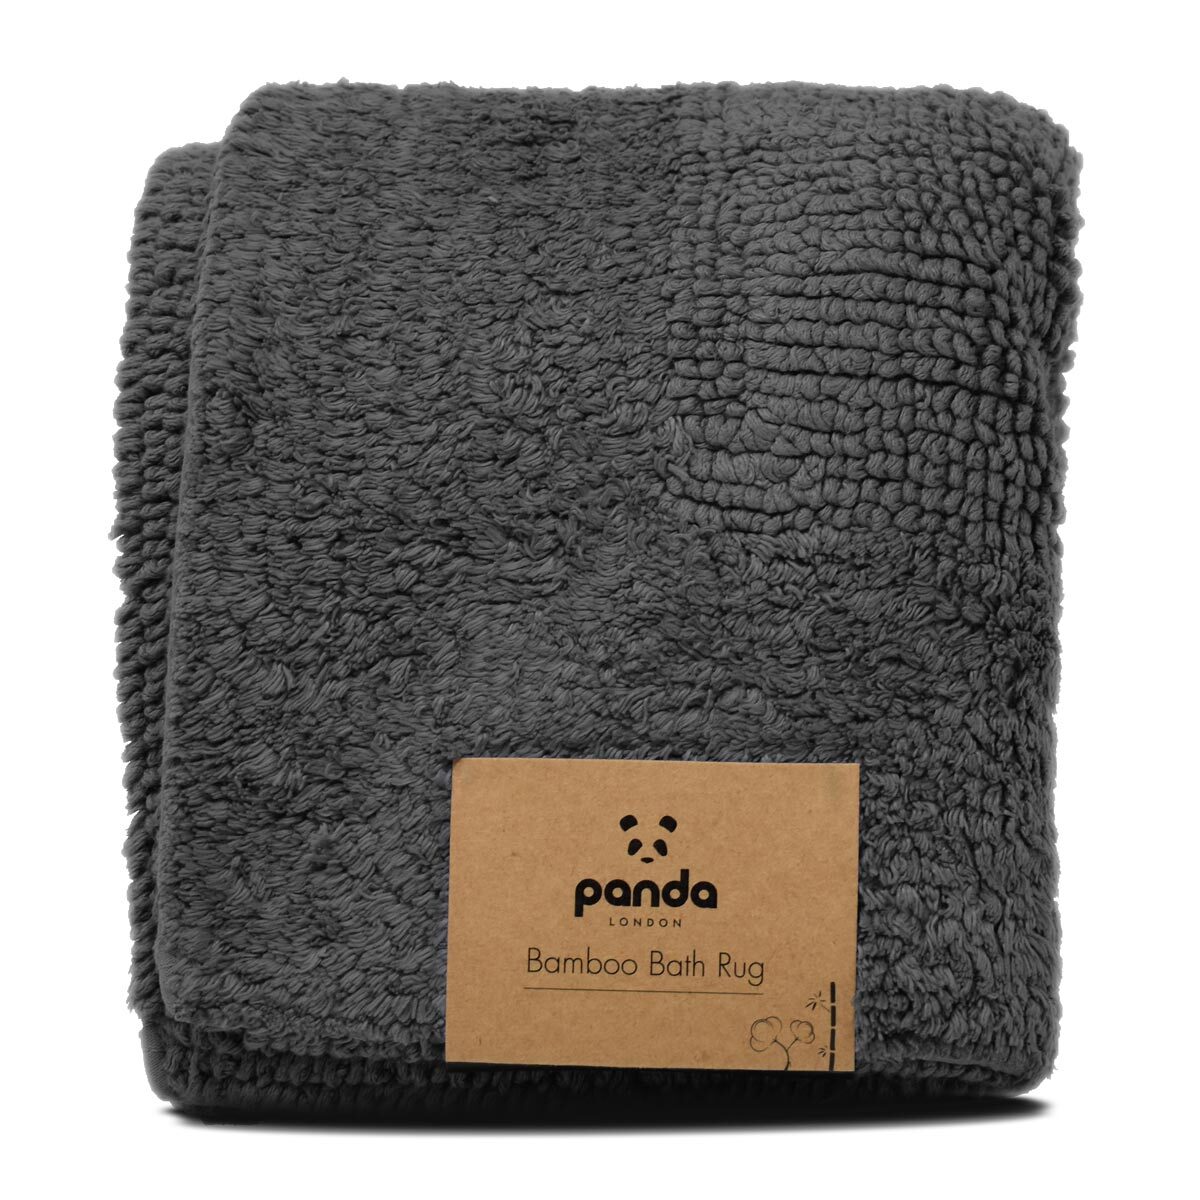 Panda Bamboo Bath Rug in Urban Grey